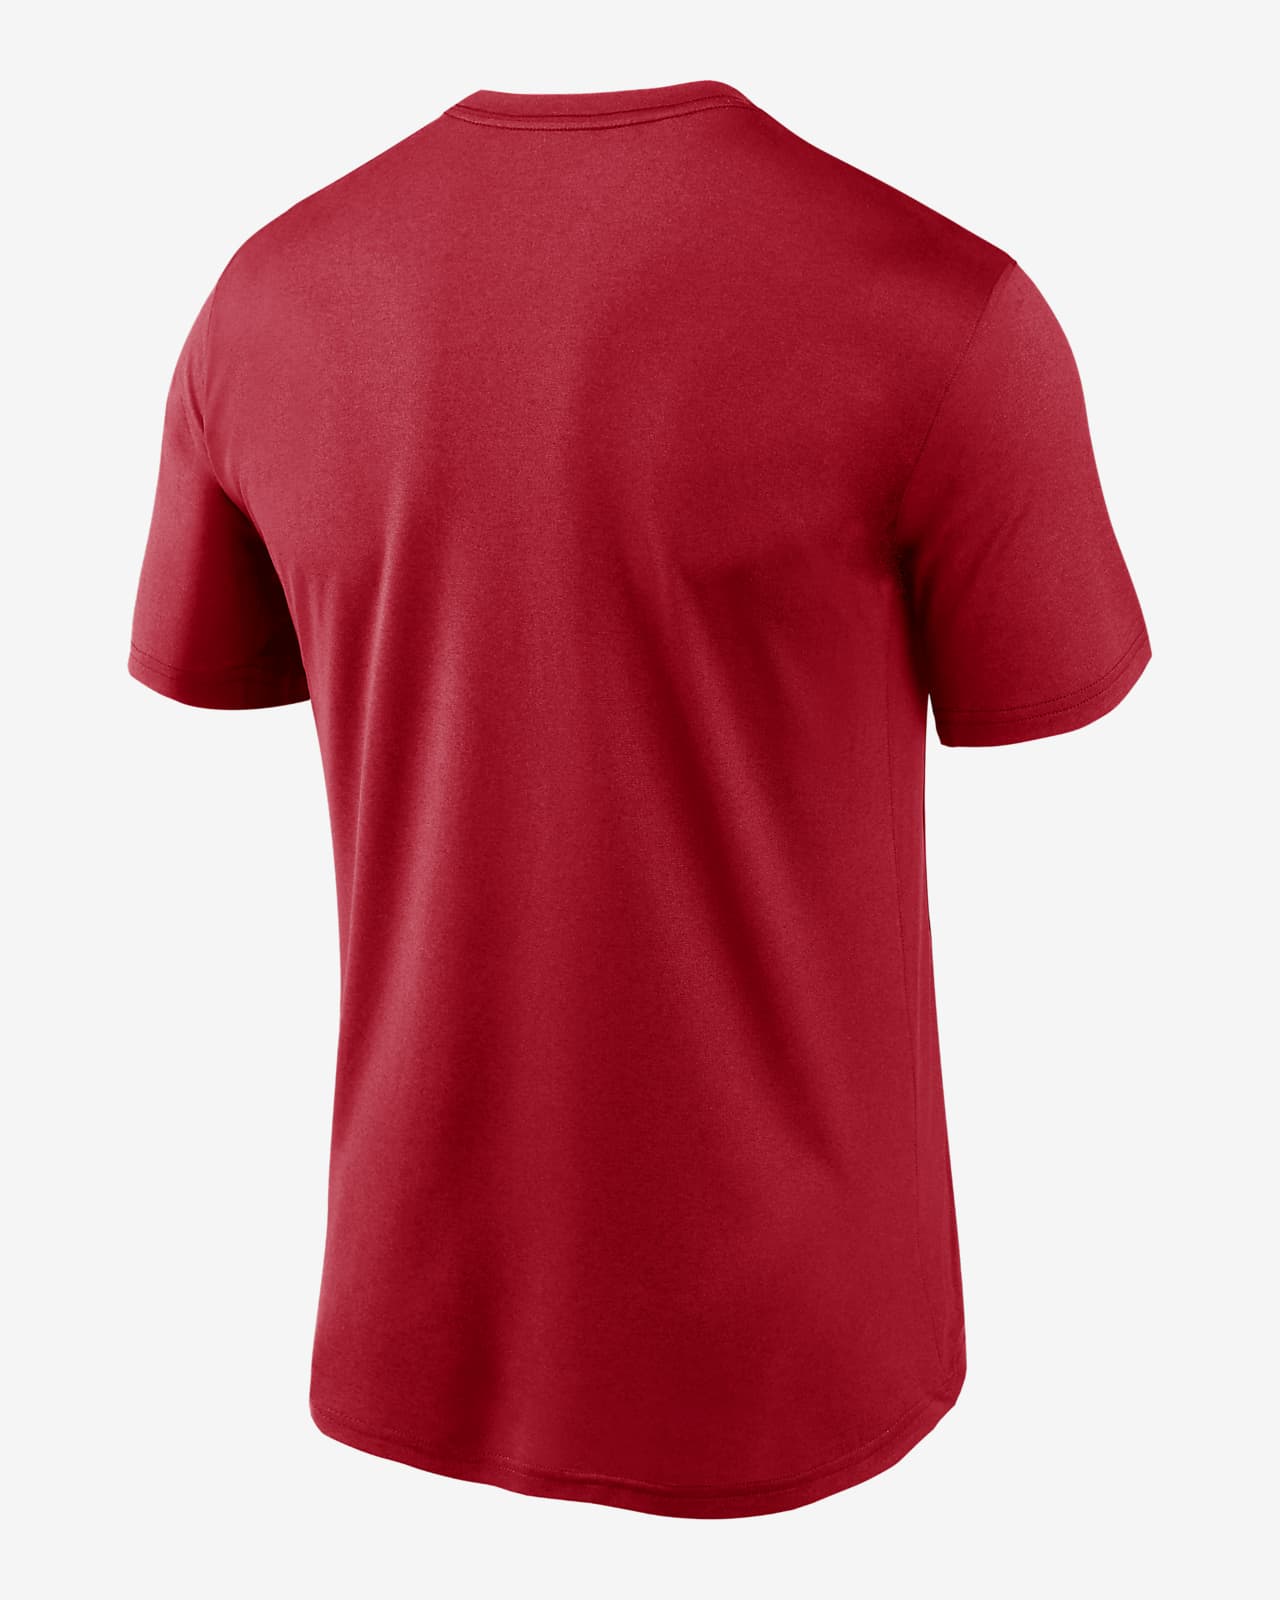 Nike Dri-FIT Logo Legend (MLB St. Louis Cardinals) Men's T-Shirt